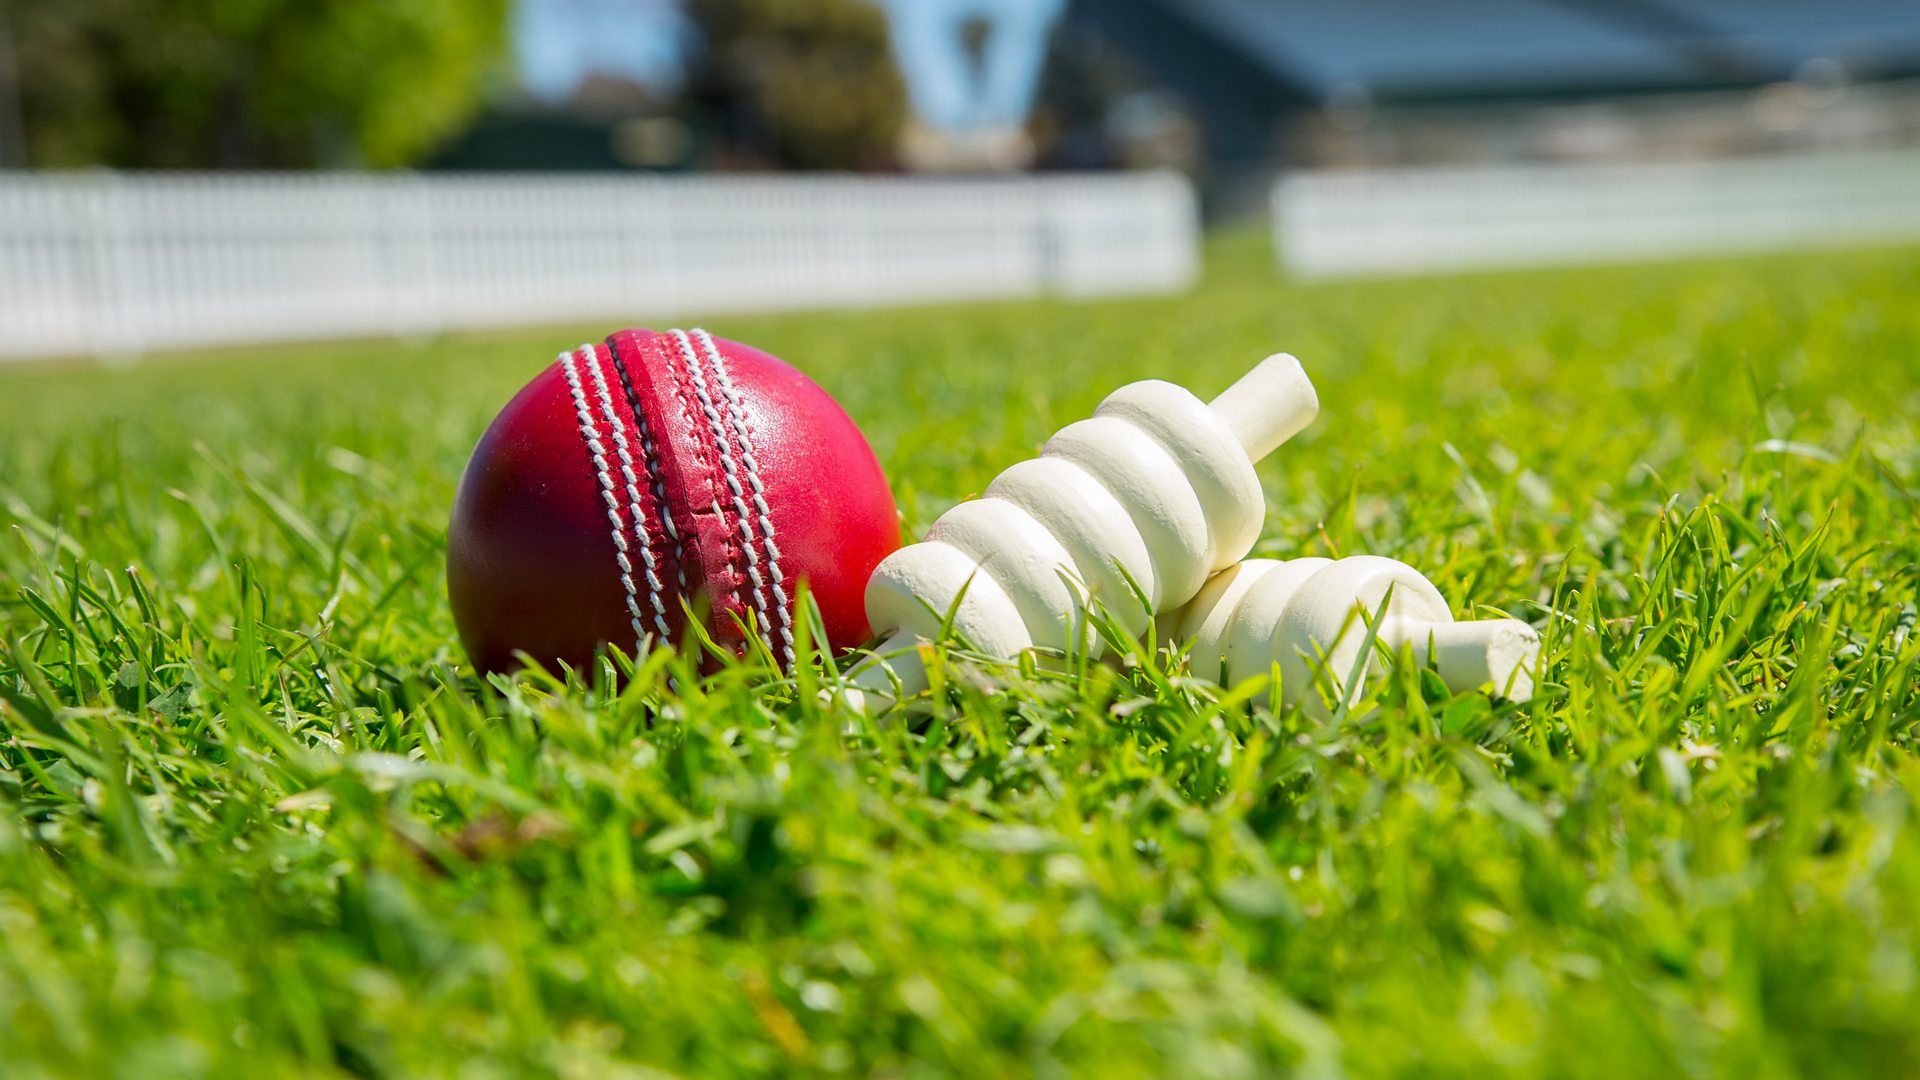 Compare Baseball And Cricket Ball: A Hard-Hitting Analysis